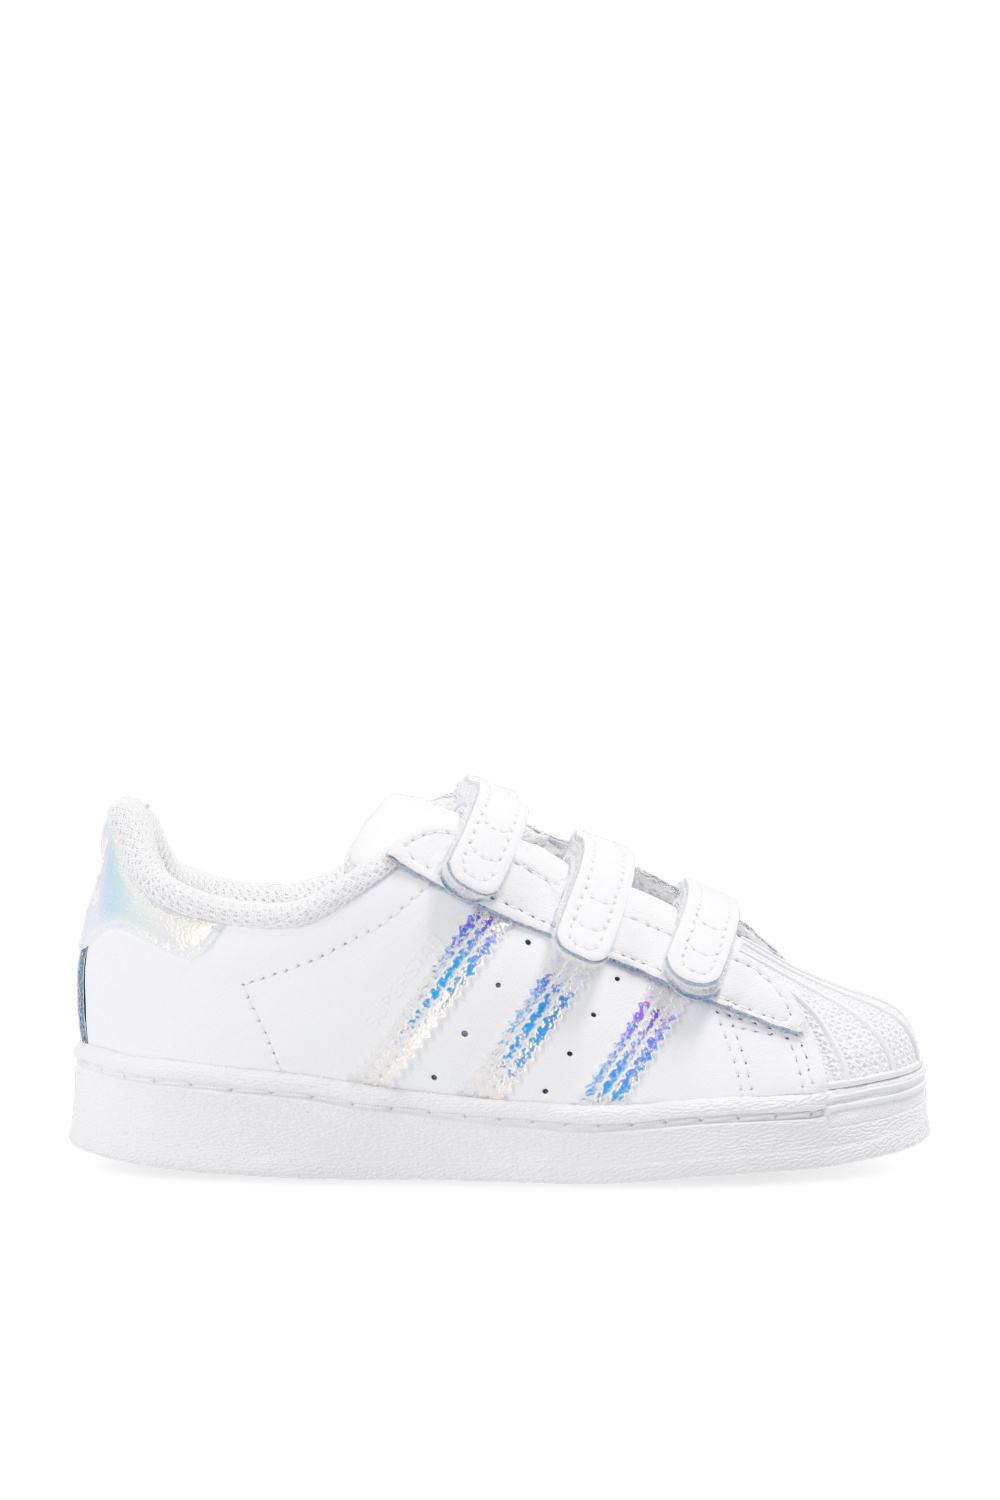 Sjah welzijn plastic IetpShops KR - White 'Superstar CF I' sneakers ADIDAS Kids - all official  adidas xr1 releases shoes